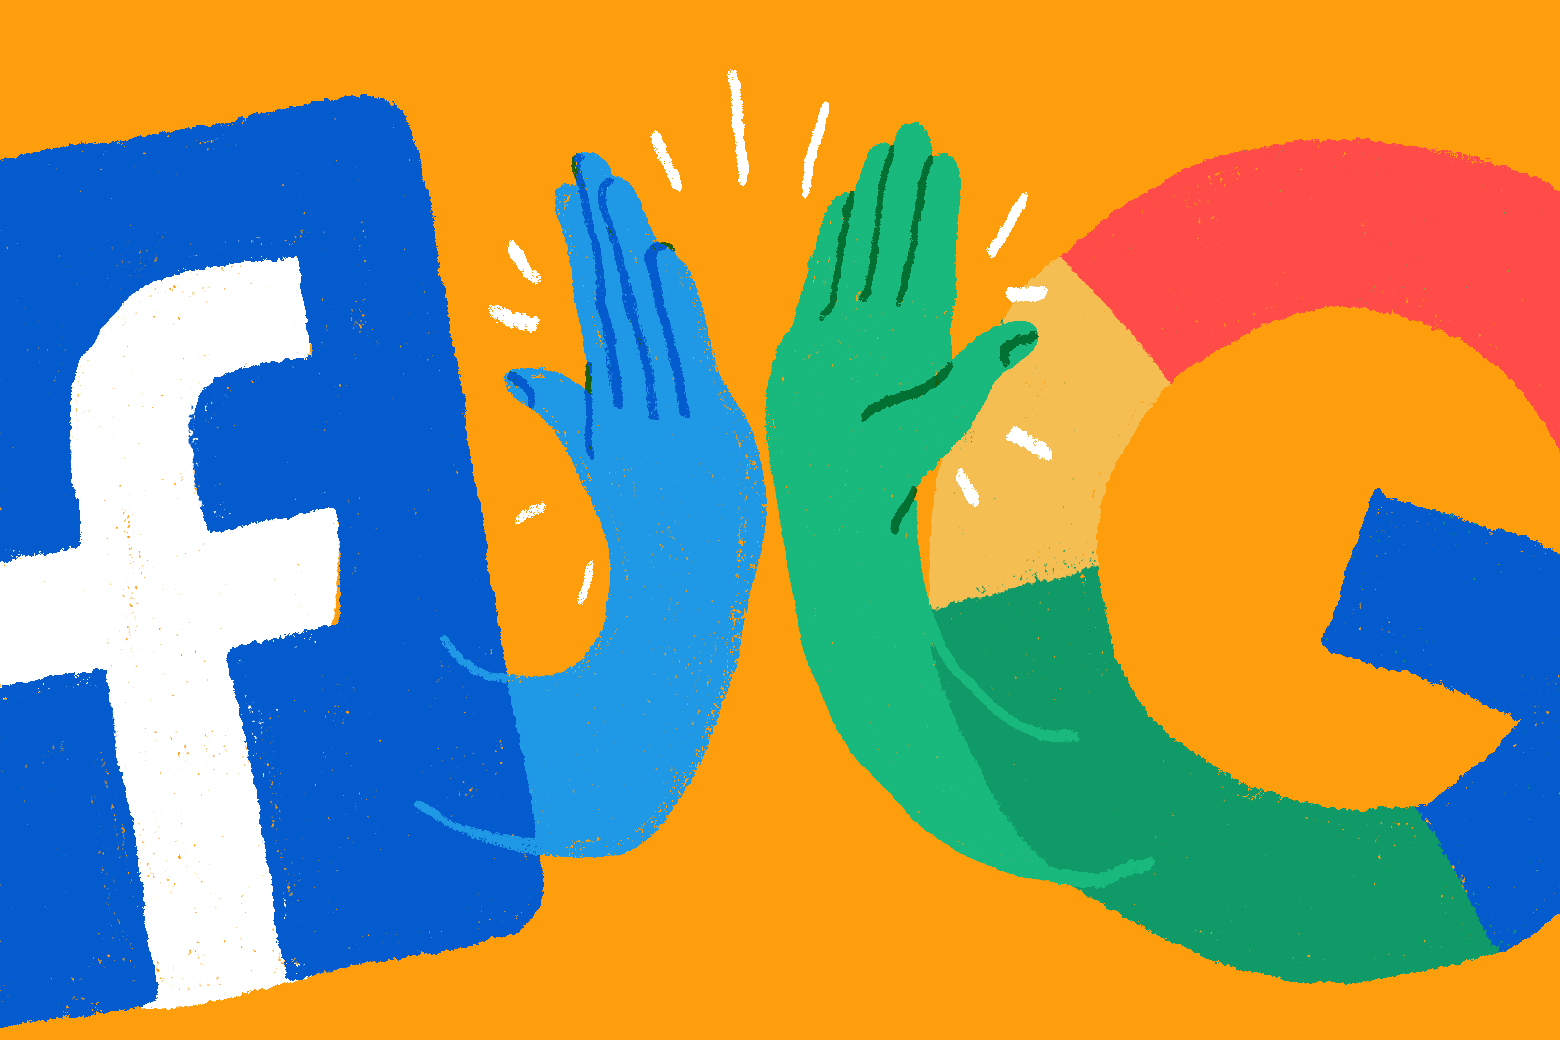 Facebook logo hi fiving Google logo.